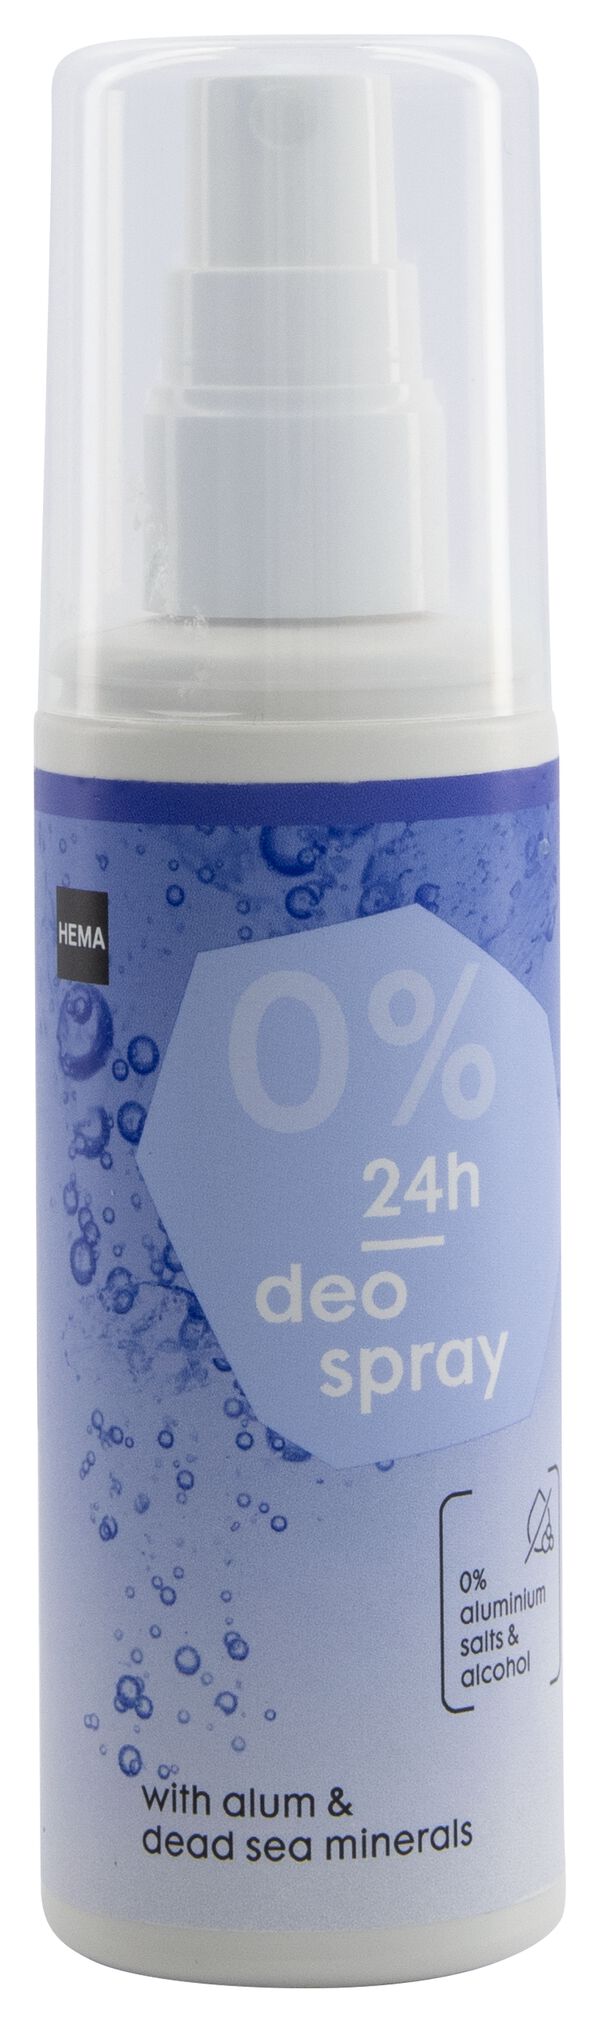 spray déodorant sans aluminium 100ml - 11310290 - HEMA